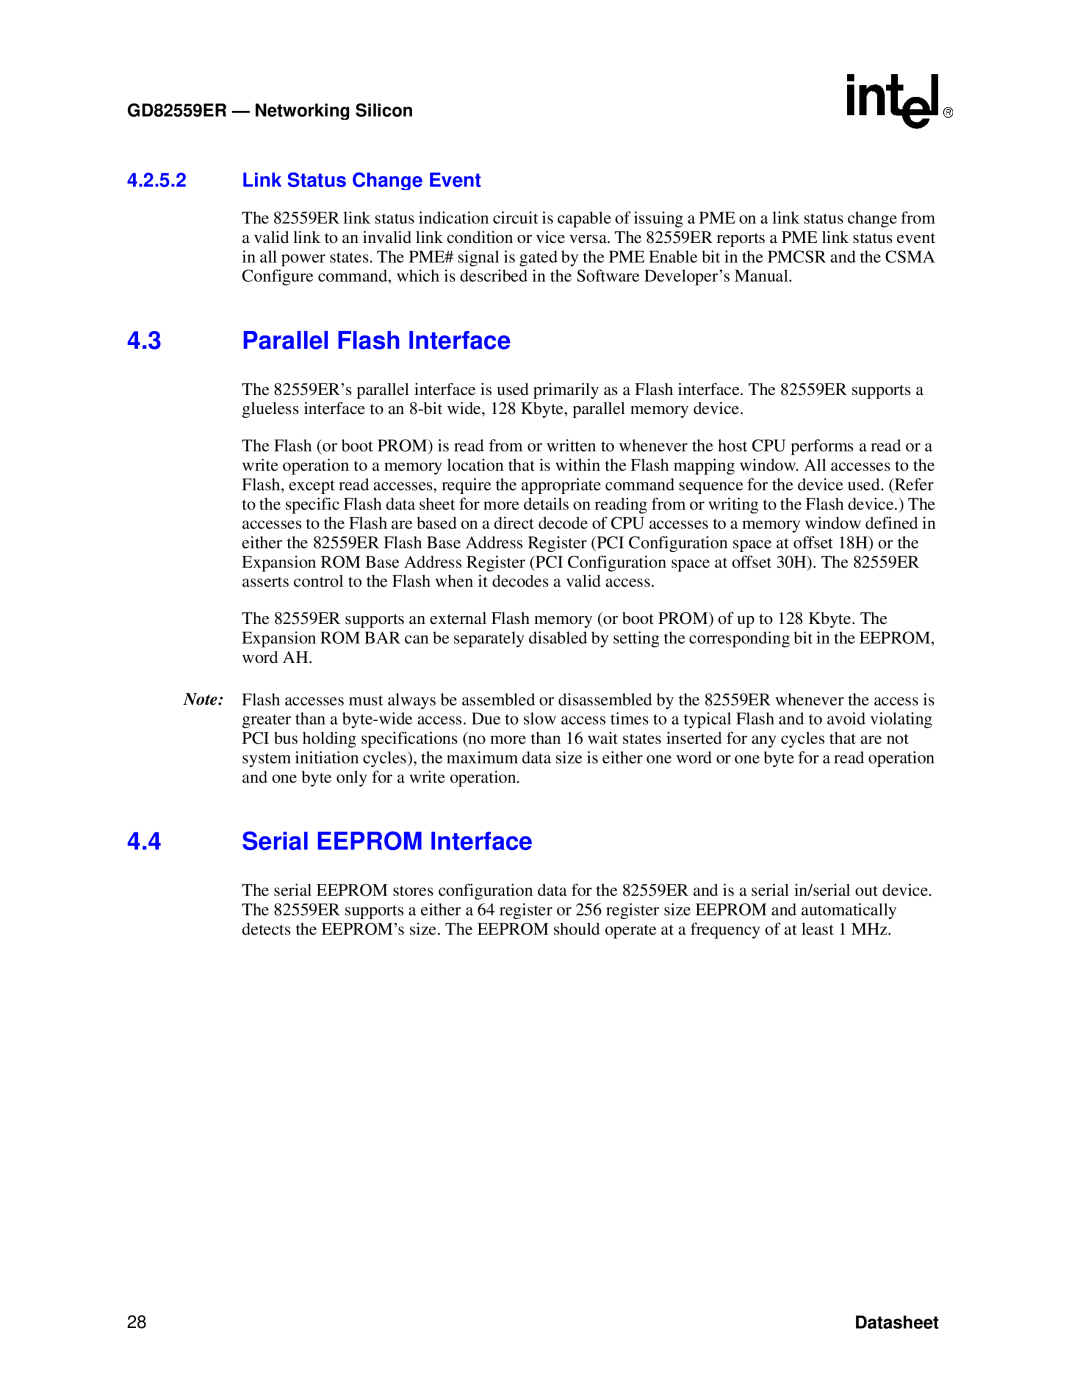 Intel GD82559ER manual Parallel Flash Interface, Serial EEPROM Interface, Link Status Change Event, Datasheet 